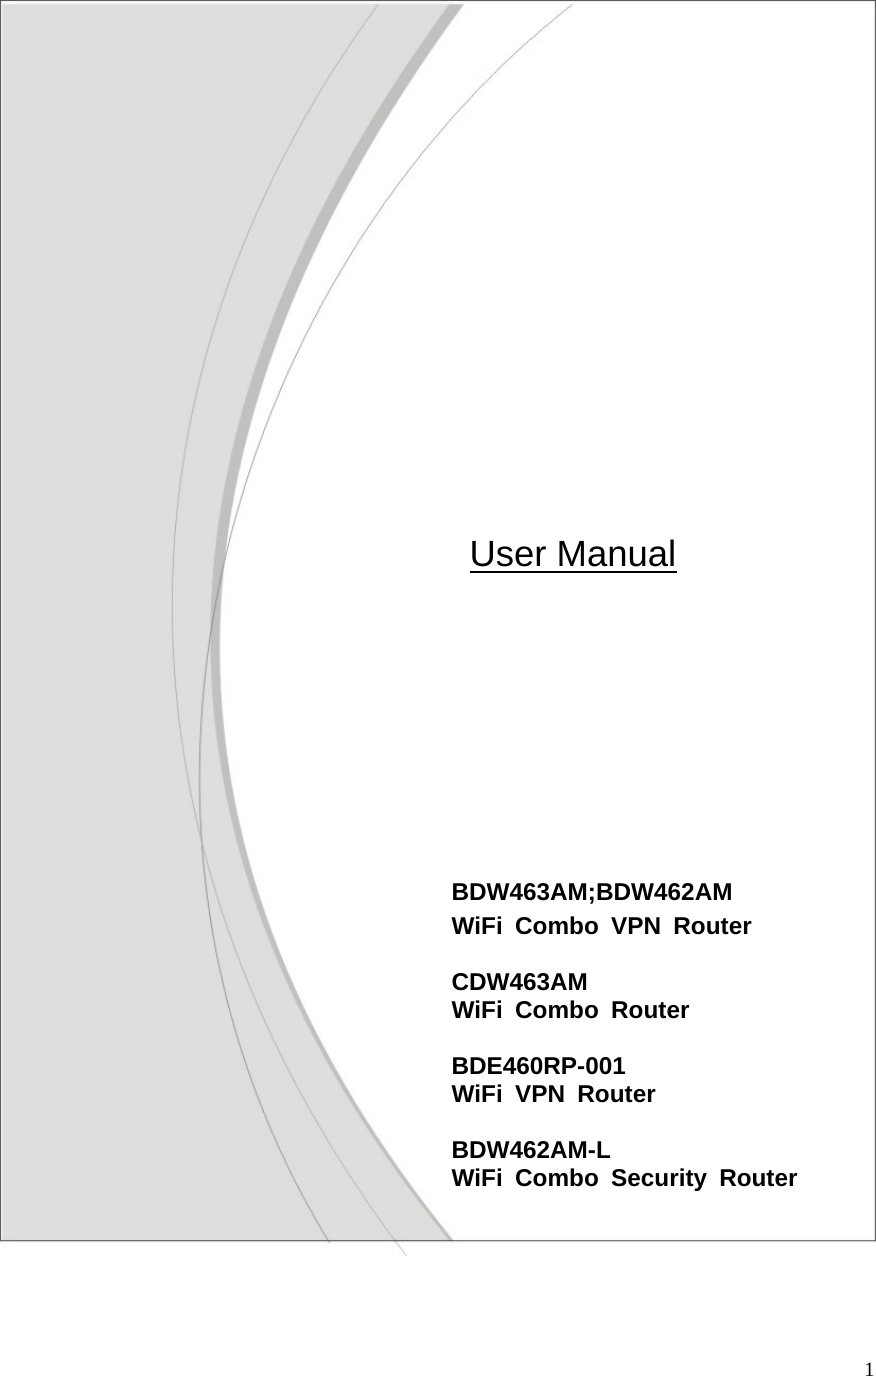  1                                            BDW463AM;BDW462AMWiFi Combo VPN Router CDW463AMWiFi Combo Router BDE460RP-001WiFi VPN Router  BDW462AM-L WiFi Combo Security Router                   User Manual 